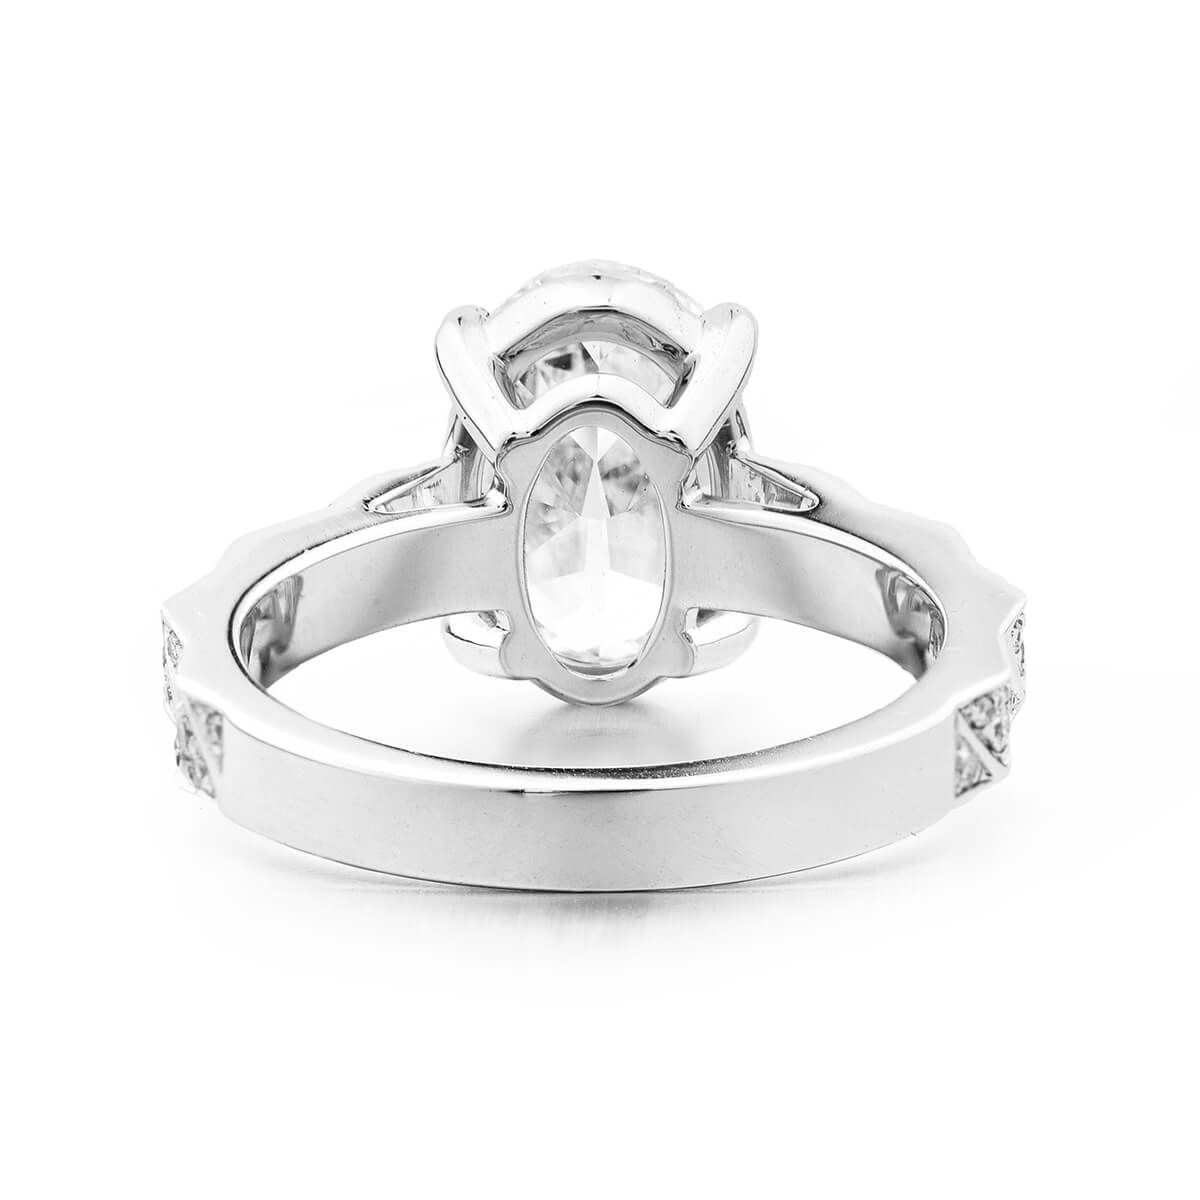  White Diamond Ring, 3.19 Ct. TW, Oval shape, GIA Certified, 6245708932